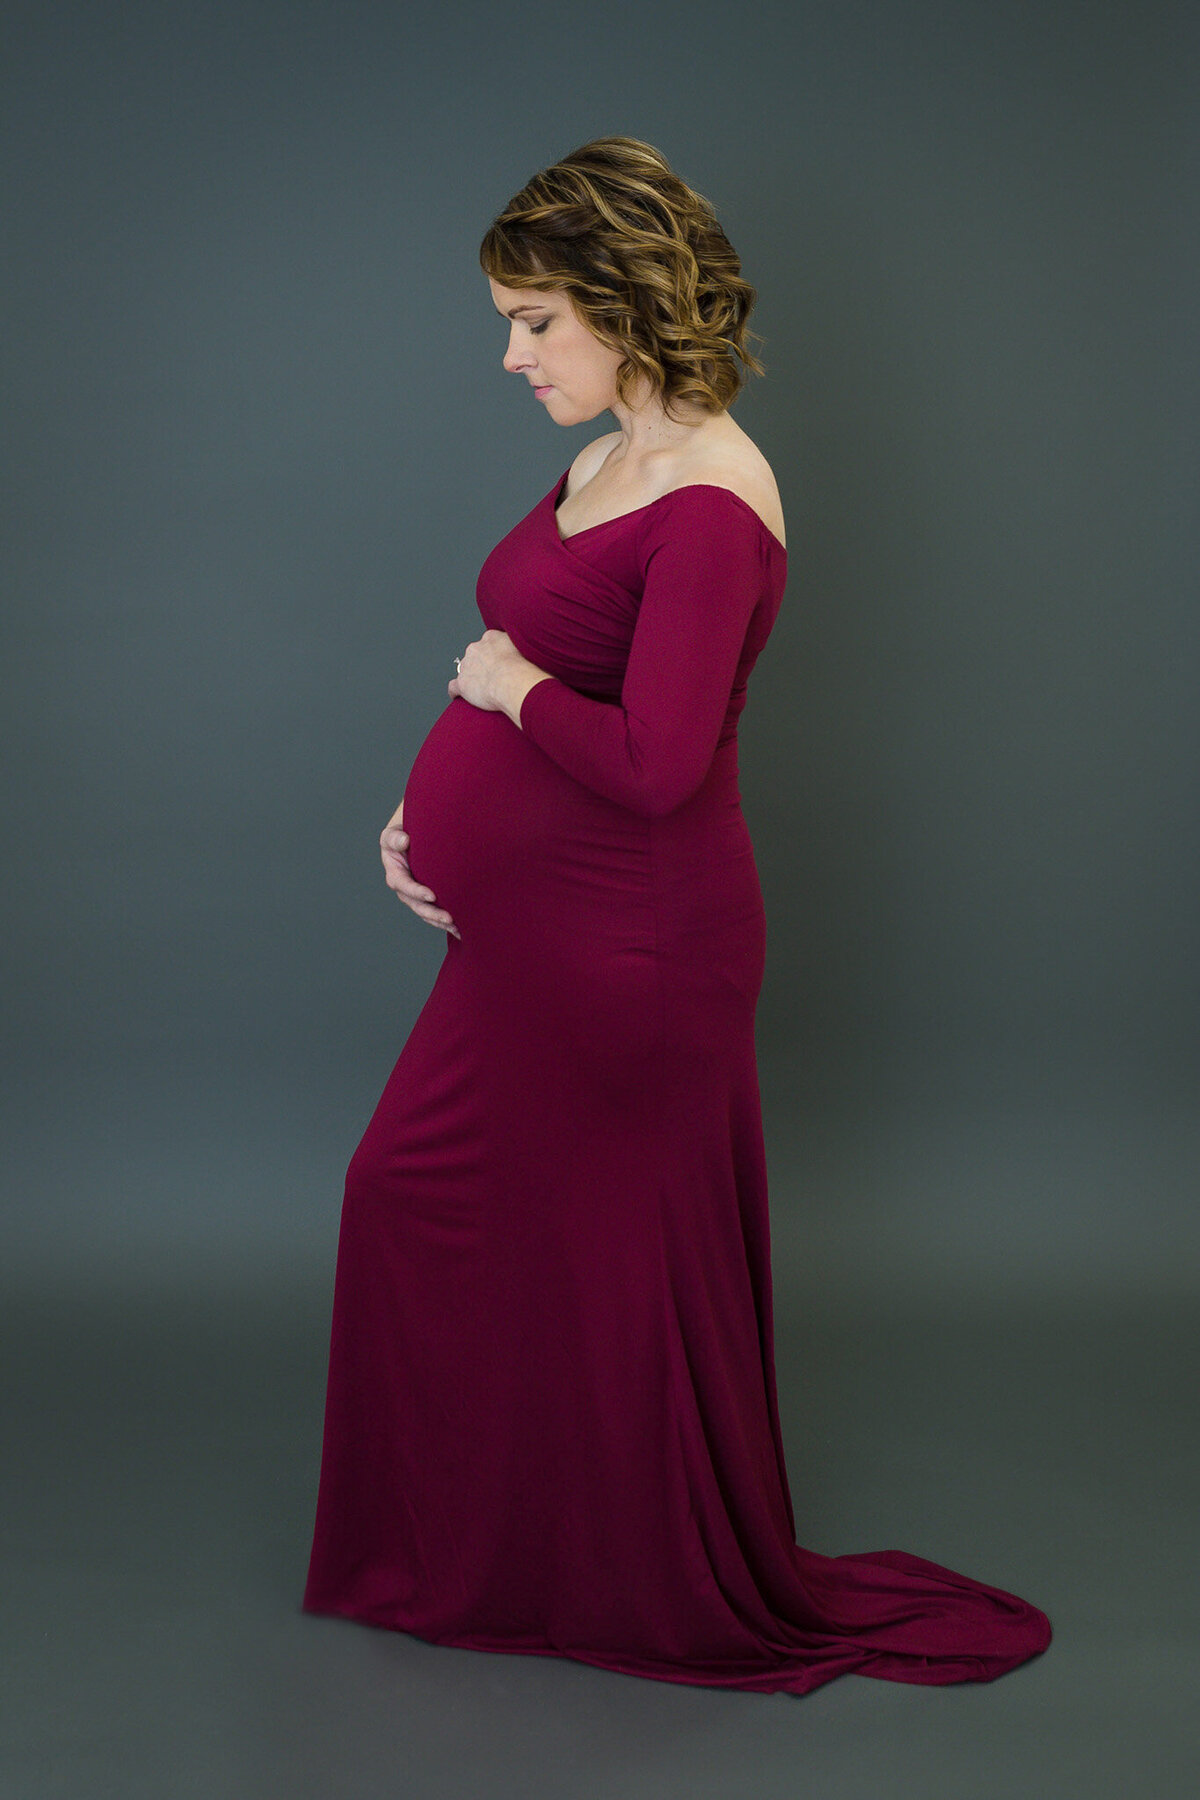 massachusetts-maternity-photographer-302